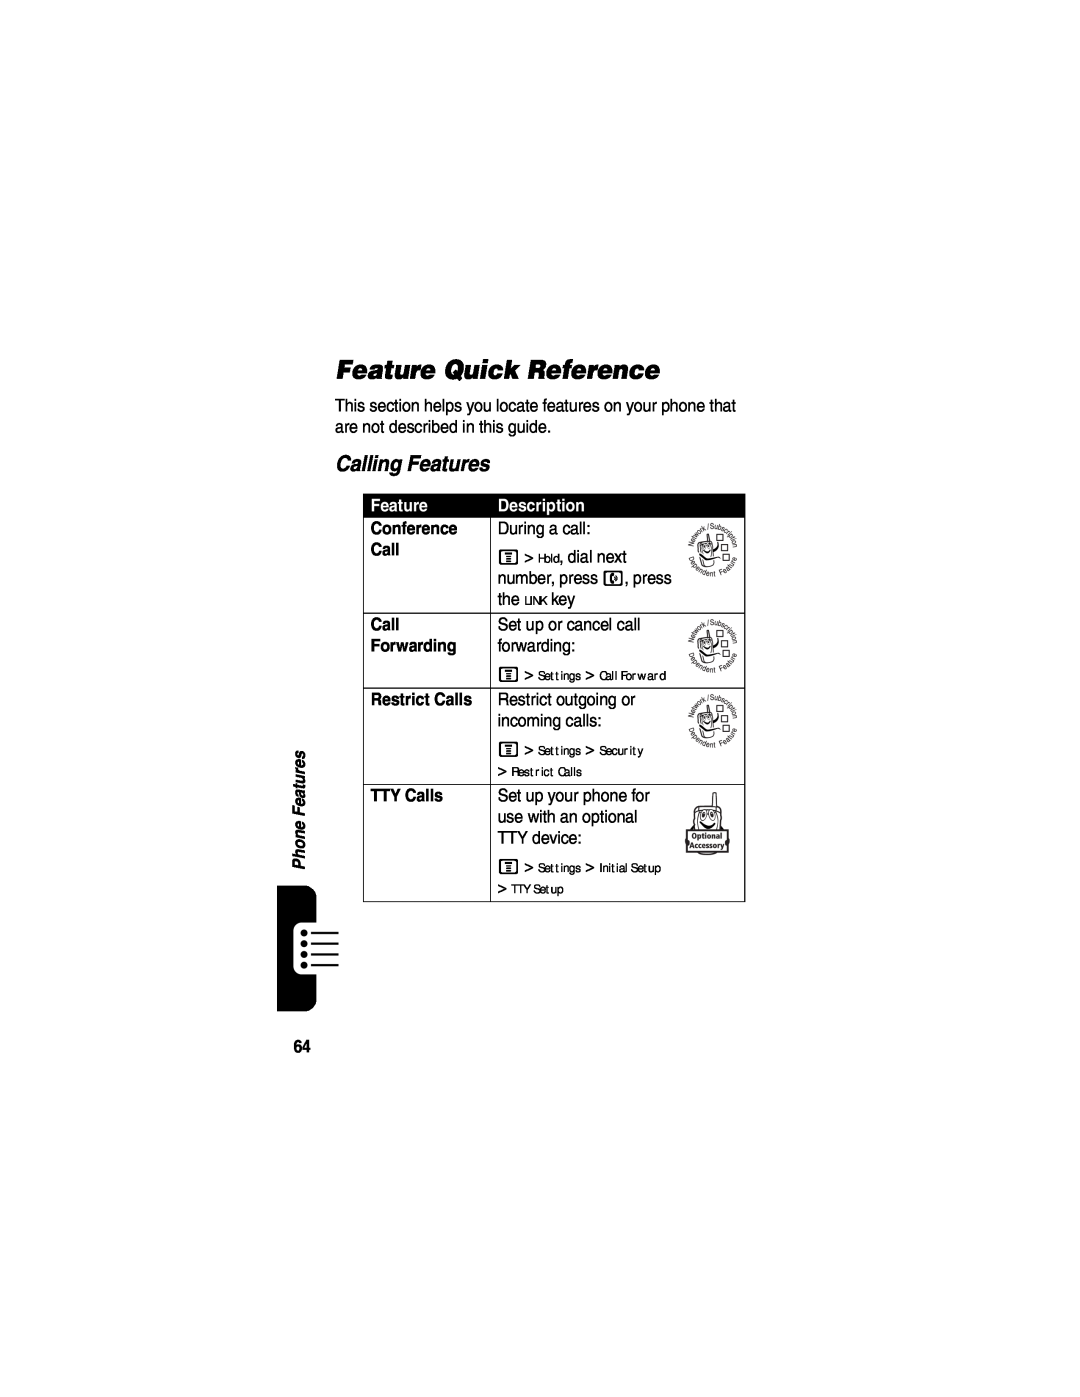 Motorola V555 manual Feature Quick Reference, Calling Features, Description 